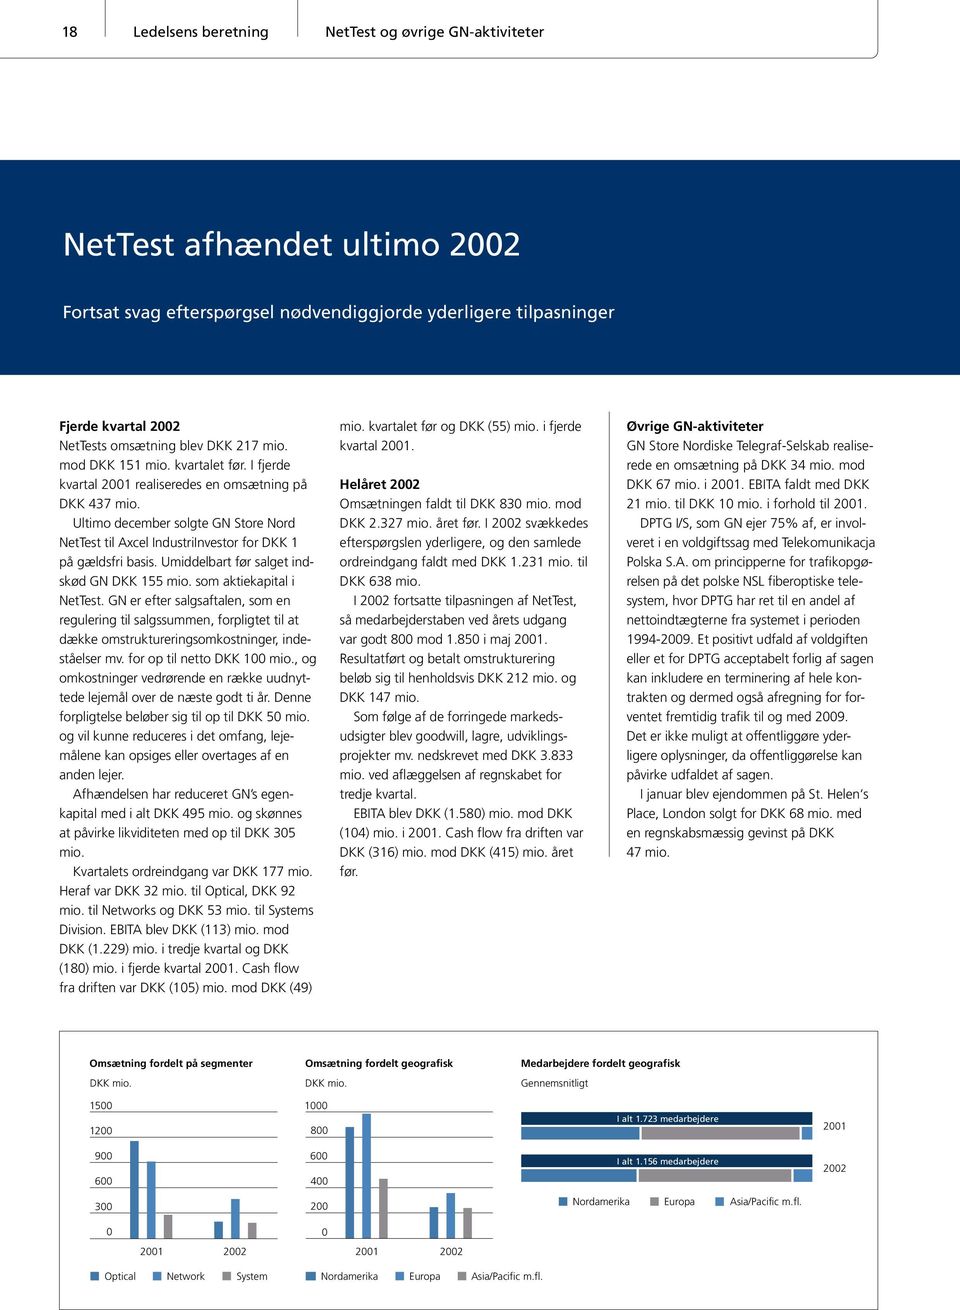 Ultimo december solgte GN Store Nord NetTest til Axcel IndustriInvestor for DKK 1 på gældsfri basis. Umiddelbart før salget indskød GN DKK 155 mio. som aktiekapital i NetTest.